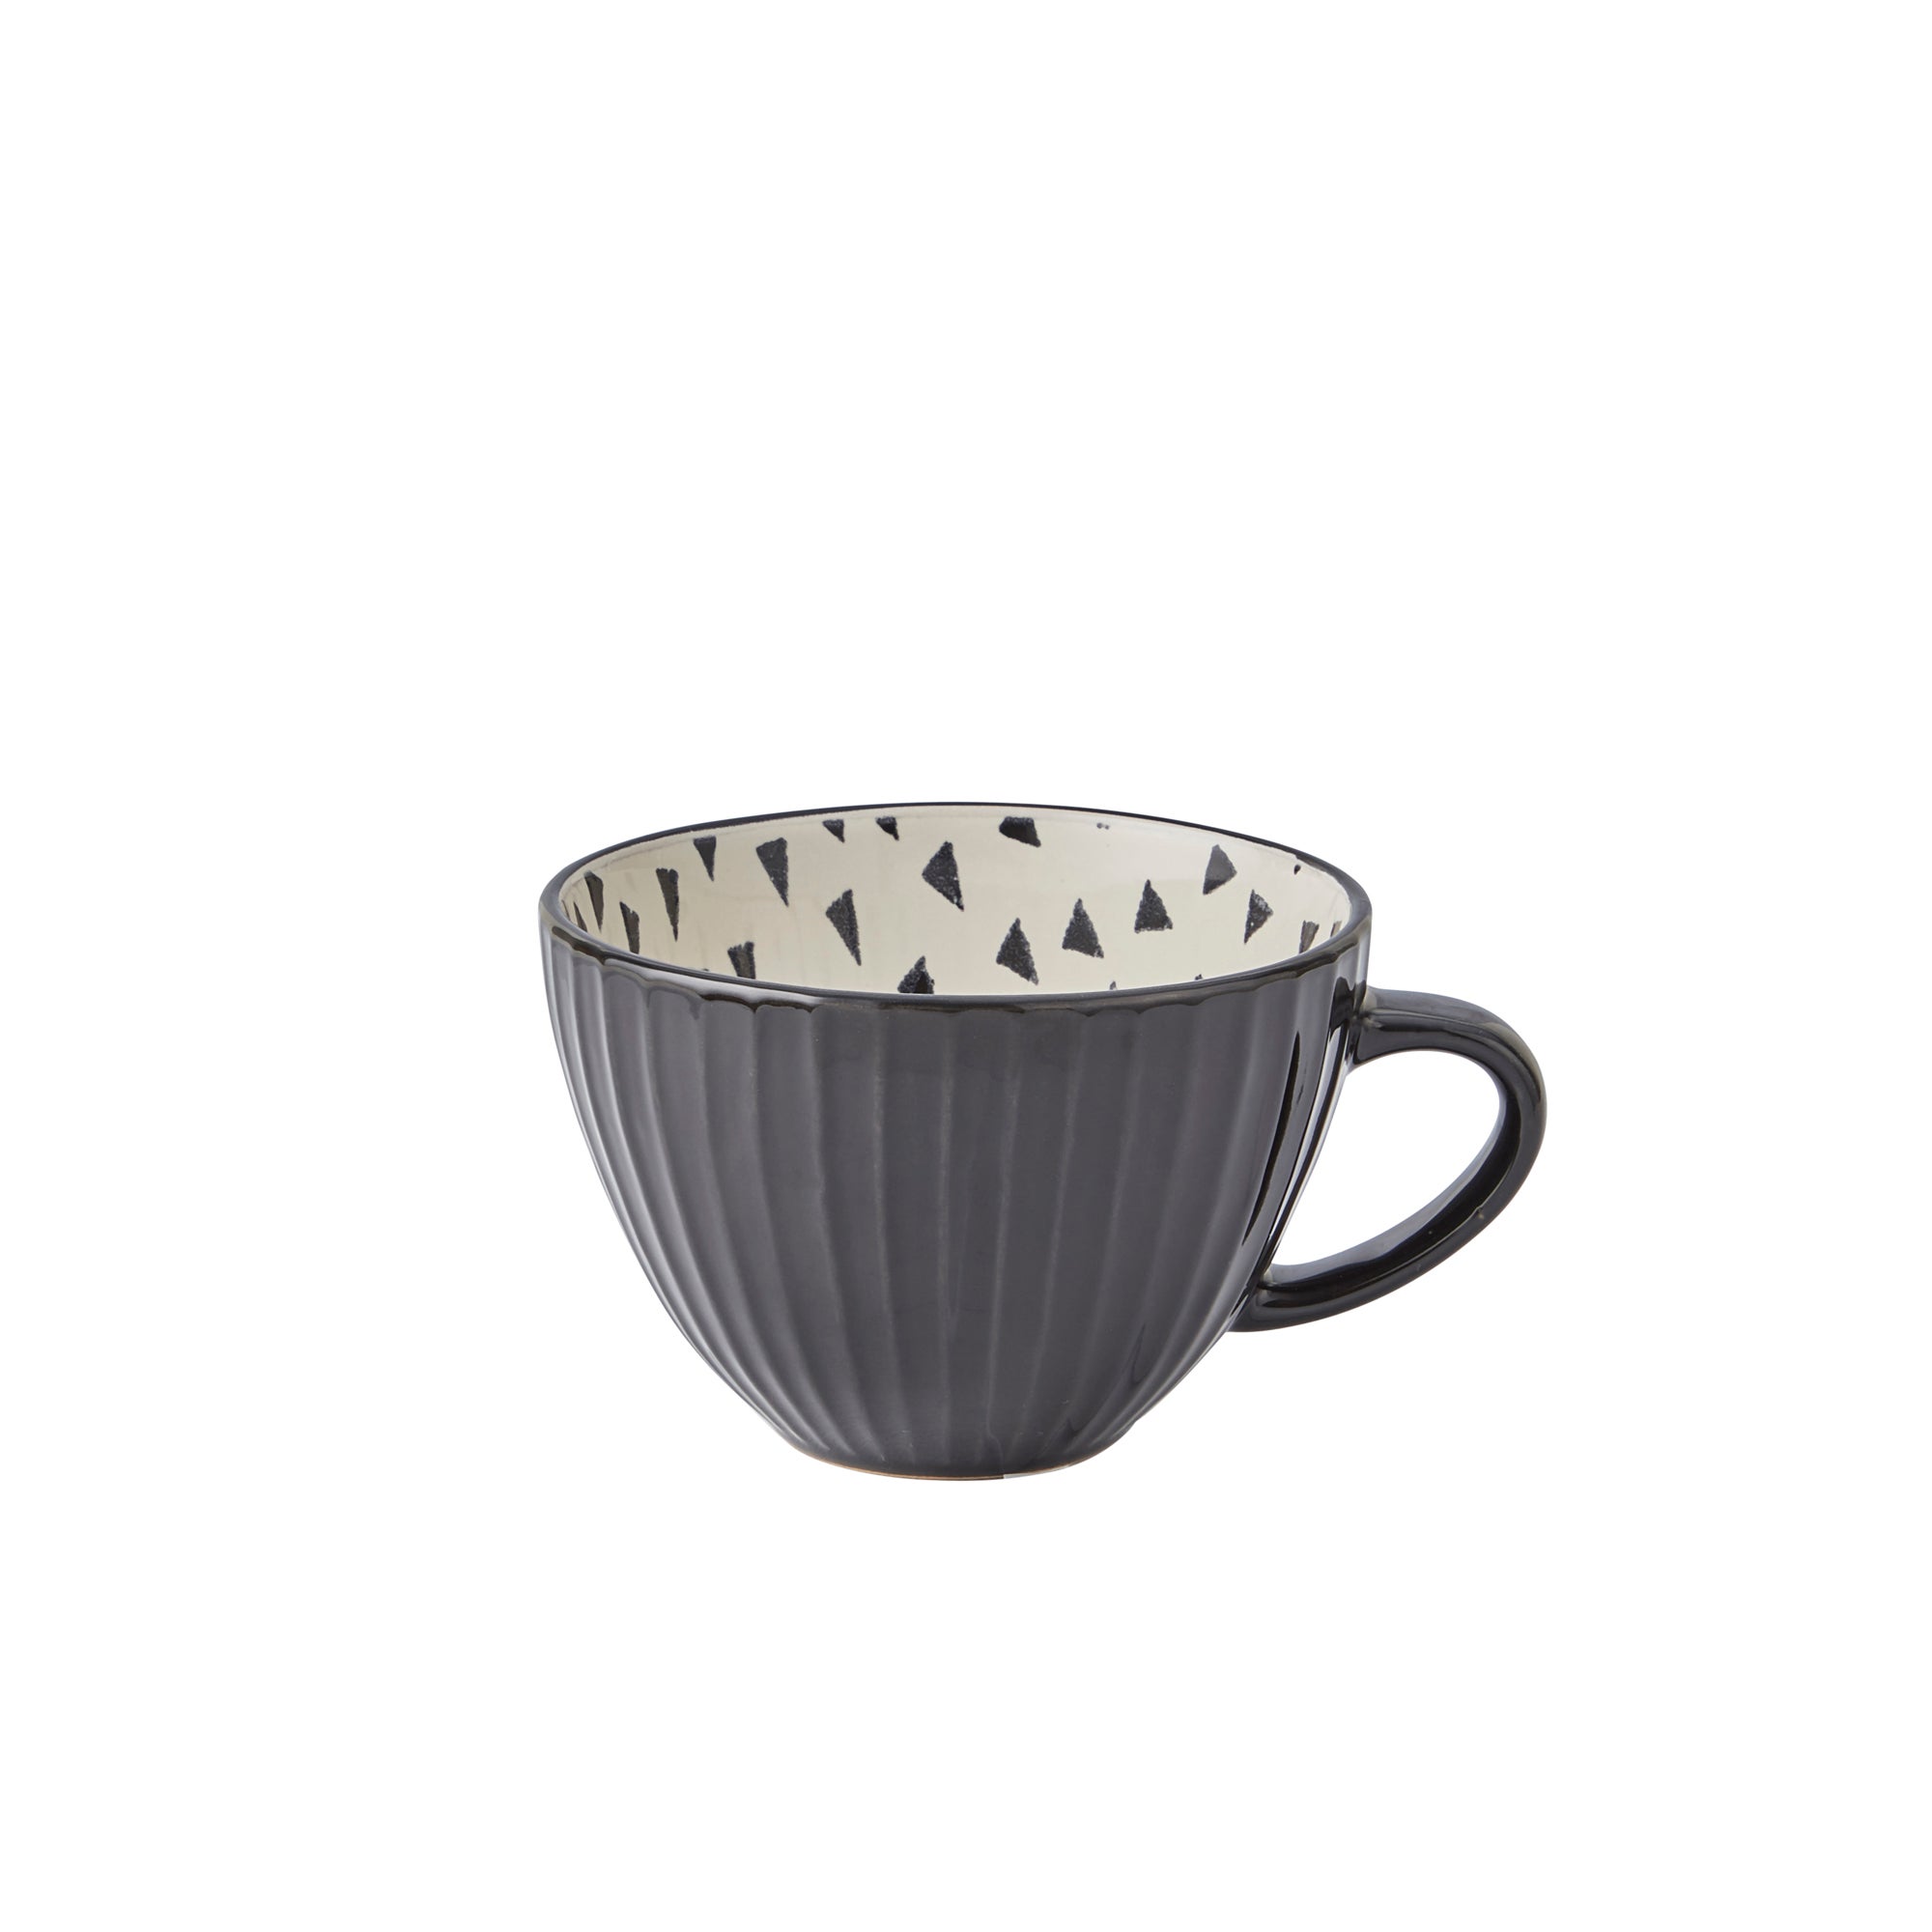 Global Textured Ceramic Mug